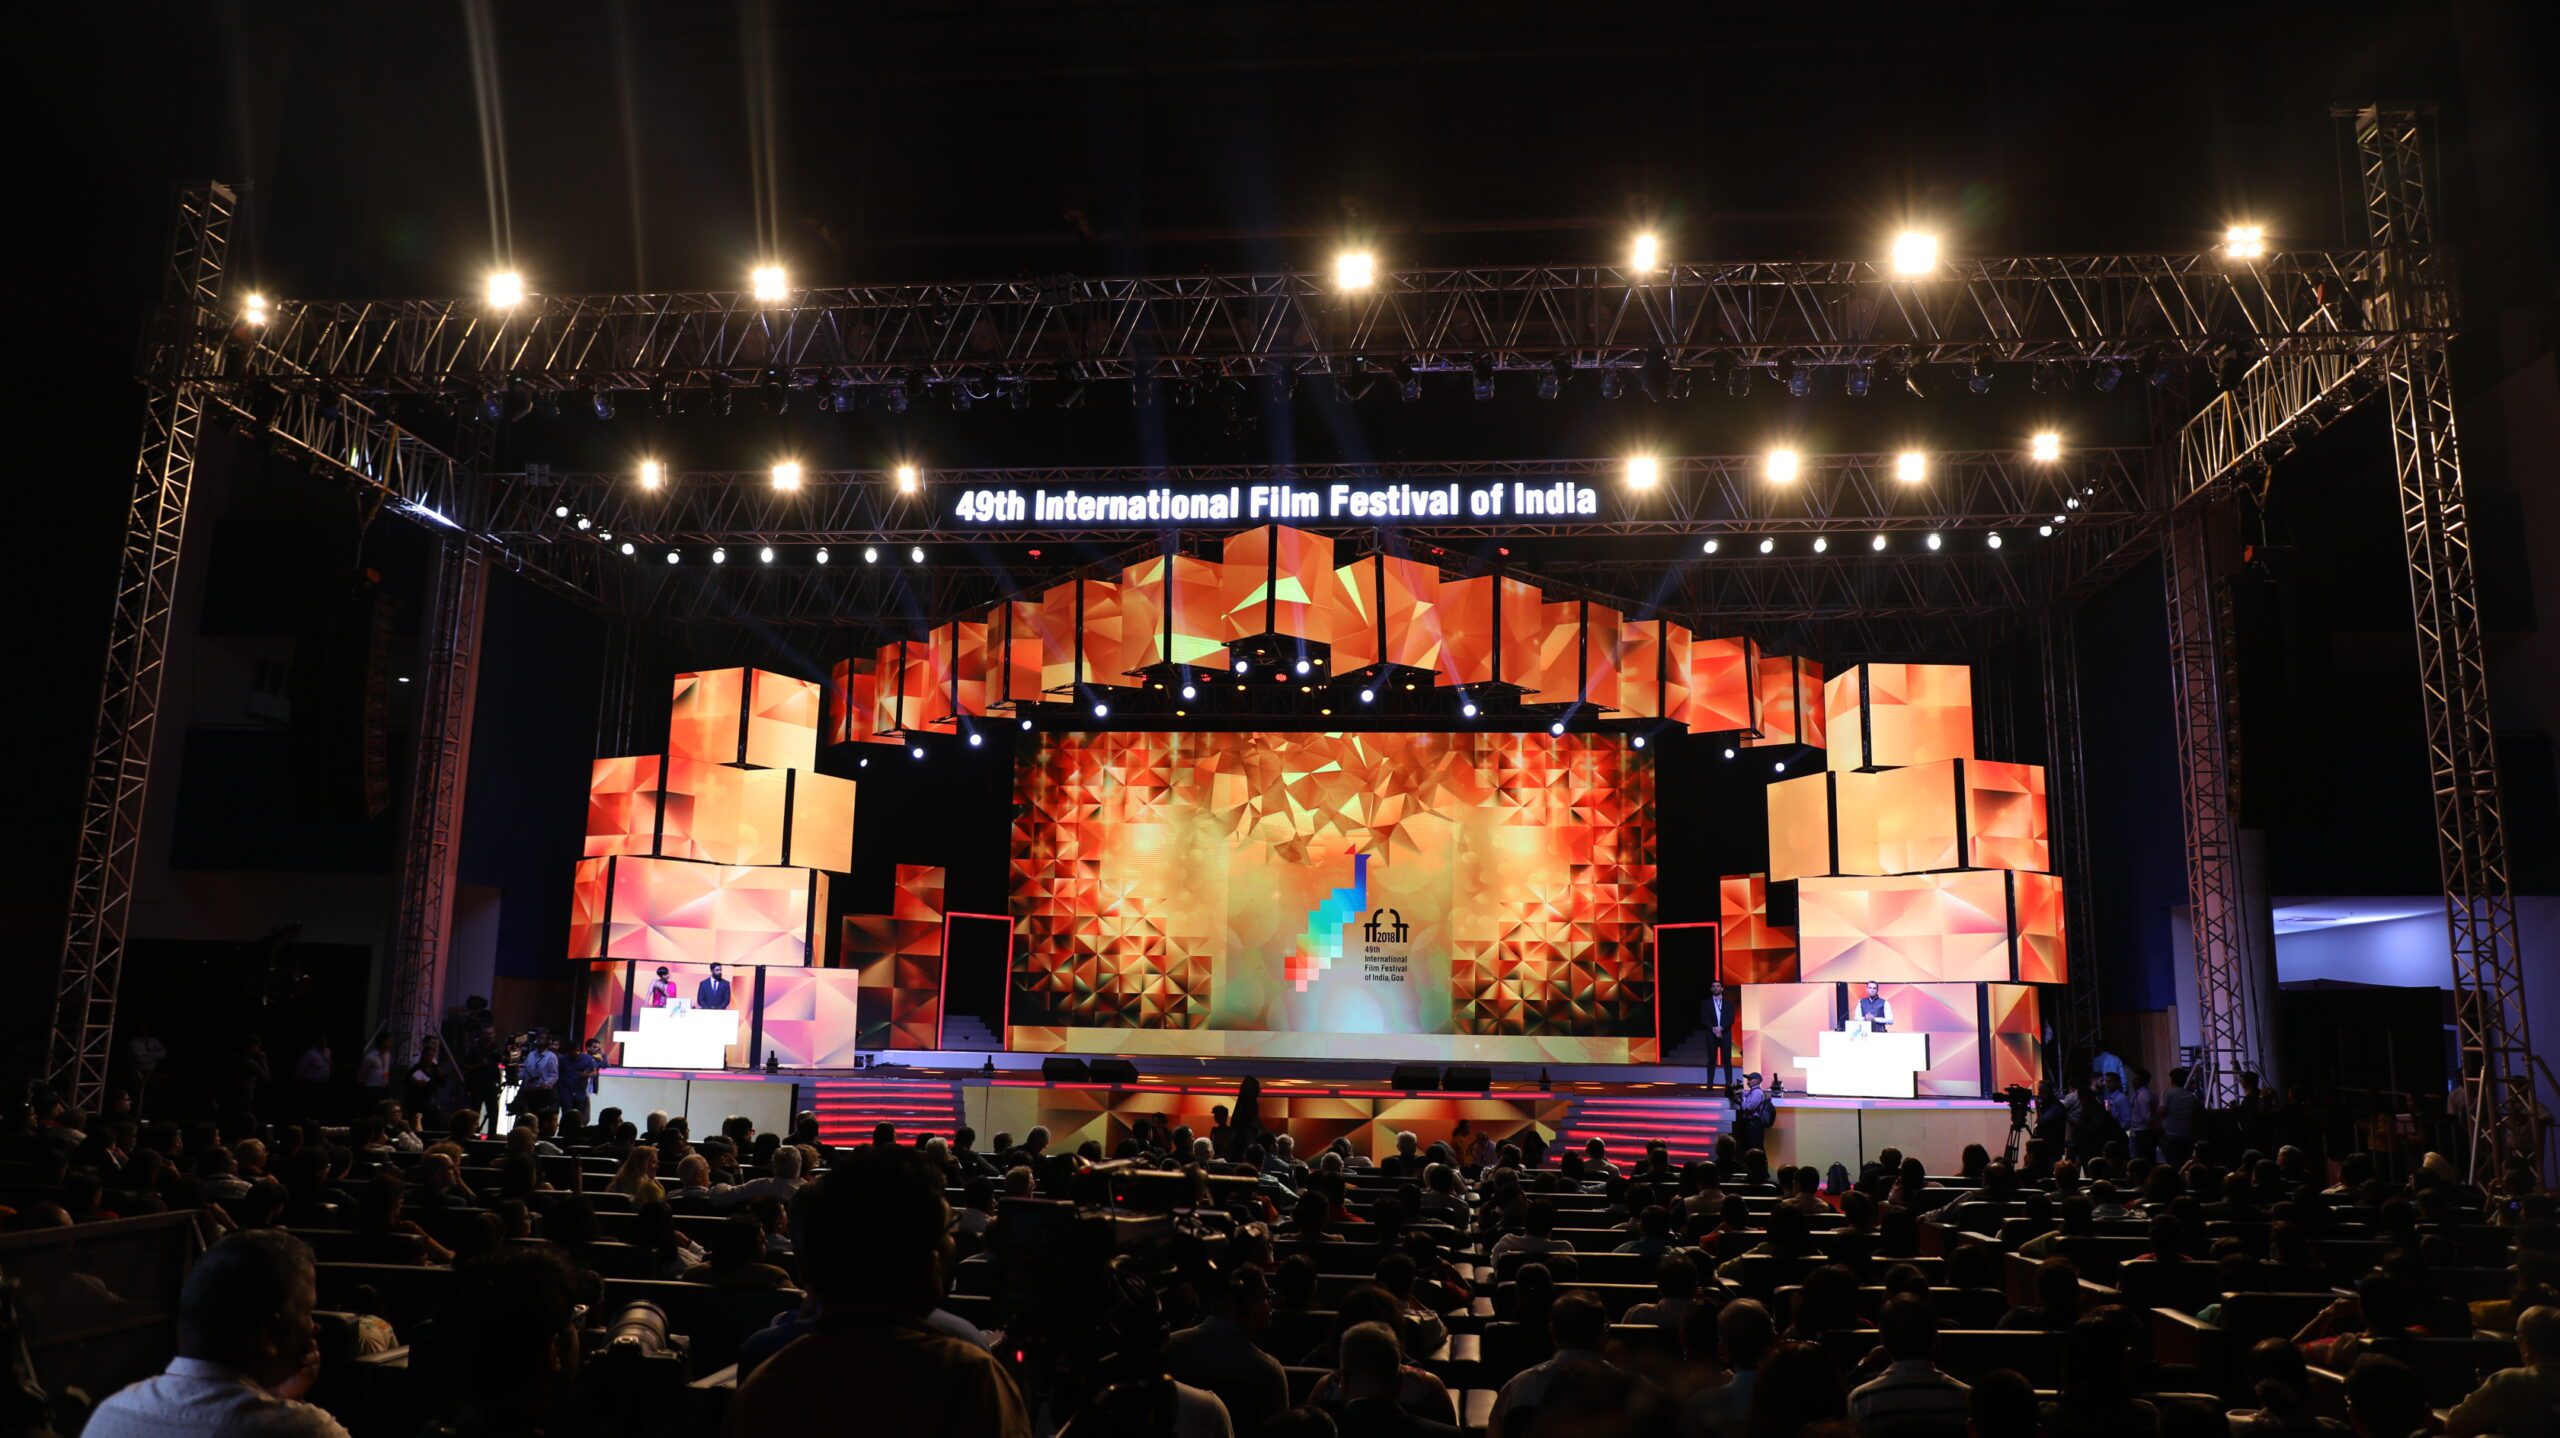 49th International Film Festival of India